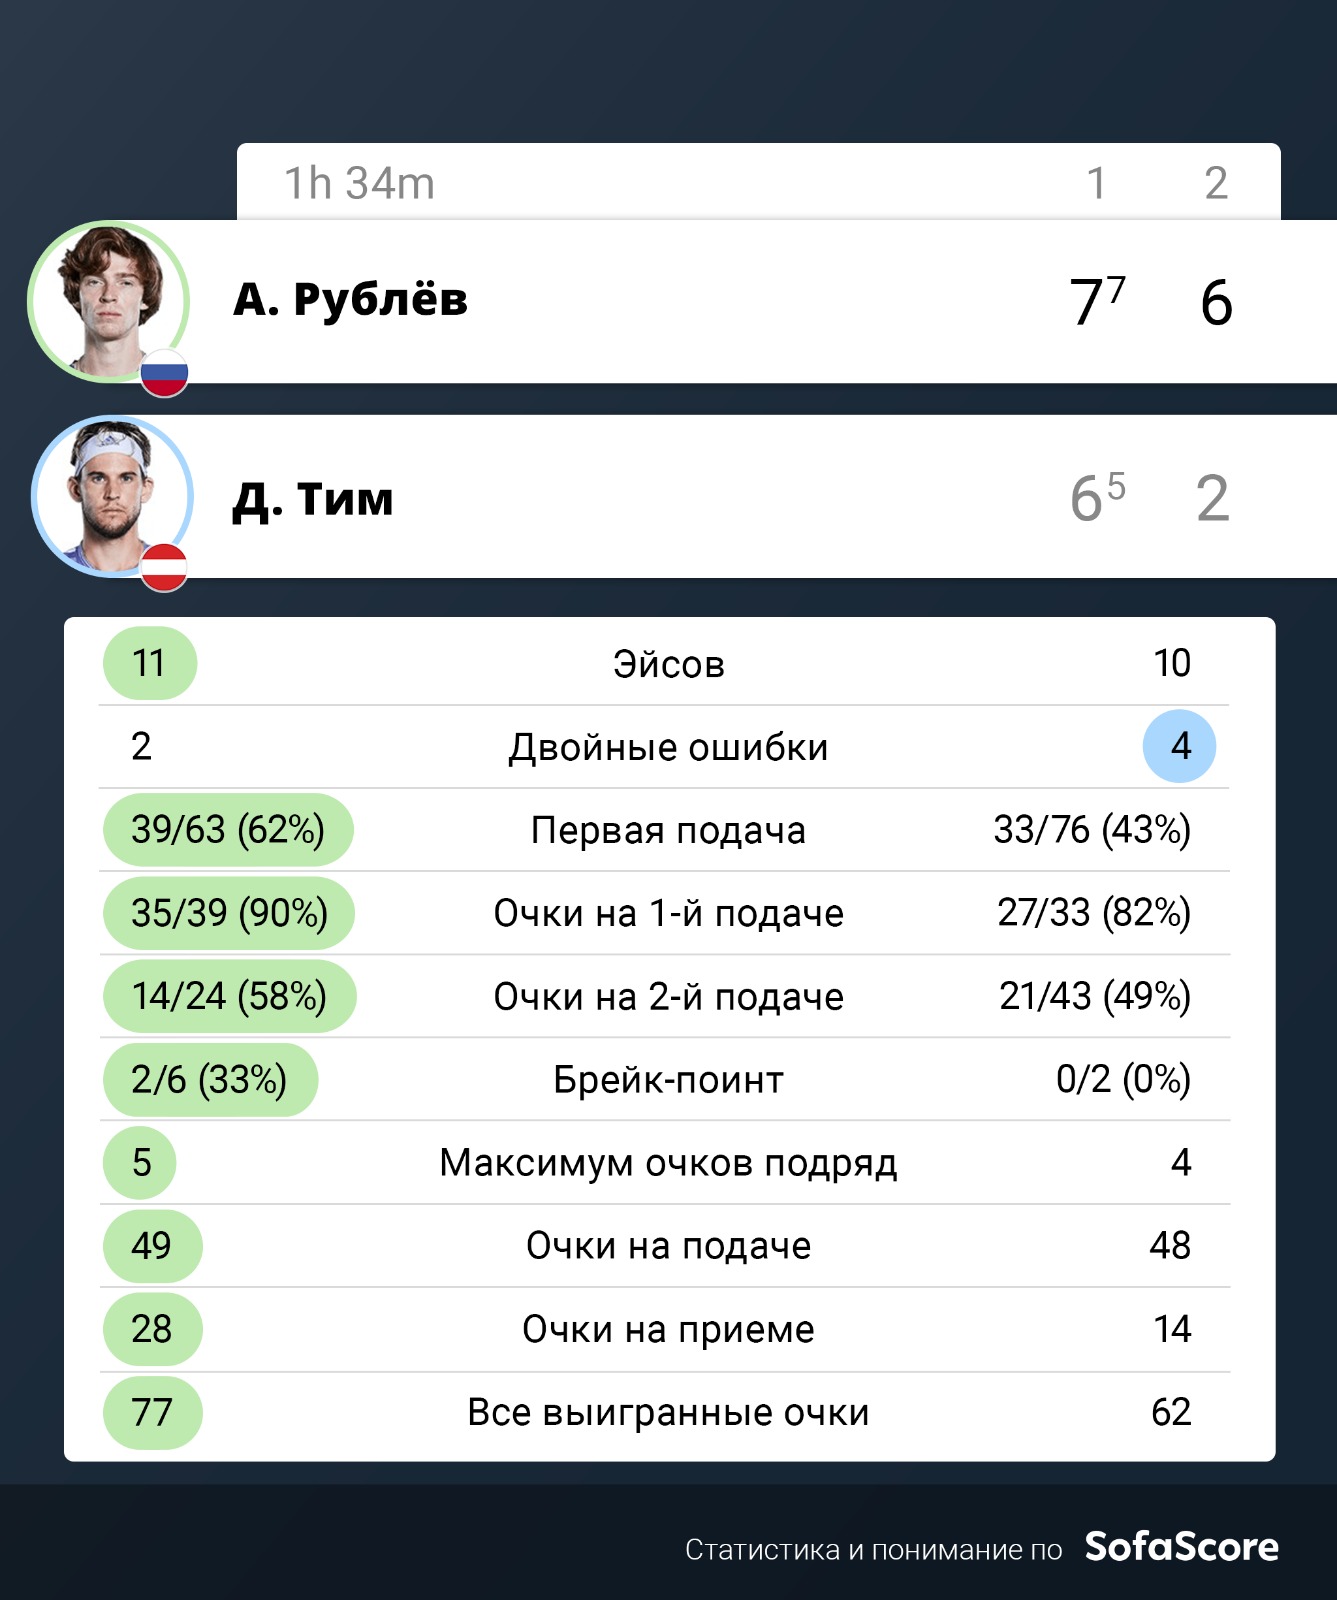 Теннисист Рублев победил чемпиона US Open на турнире в Вене